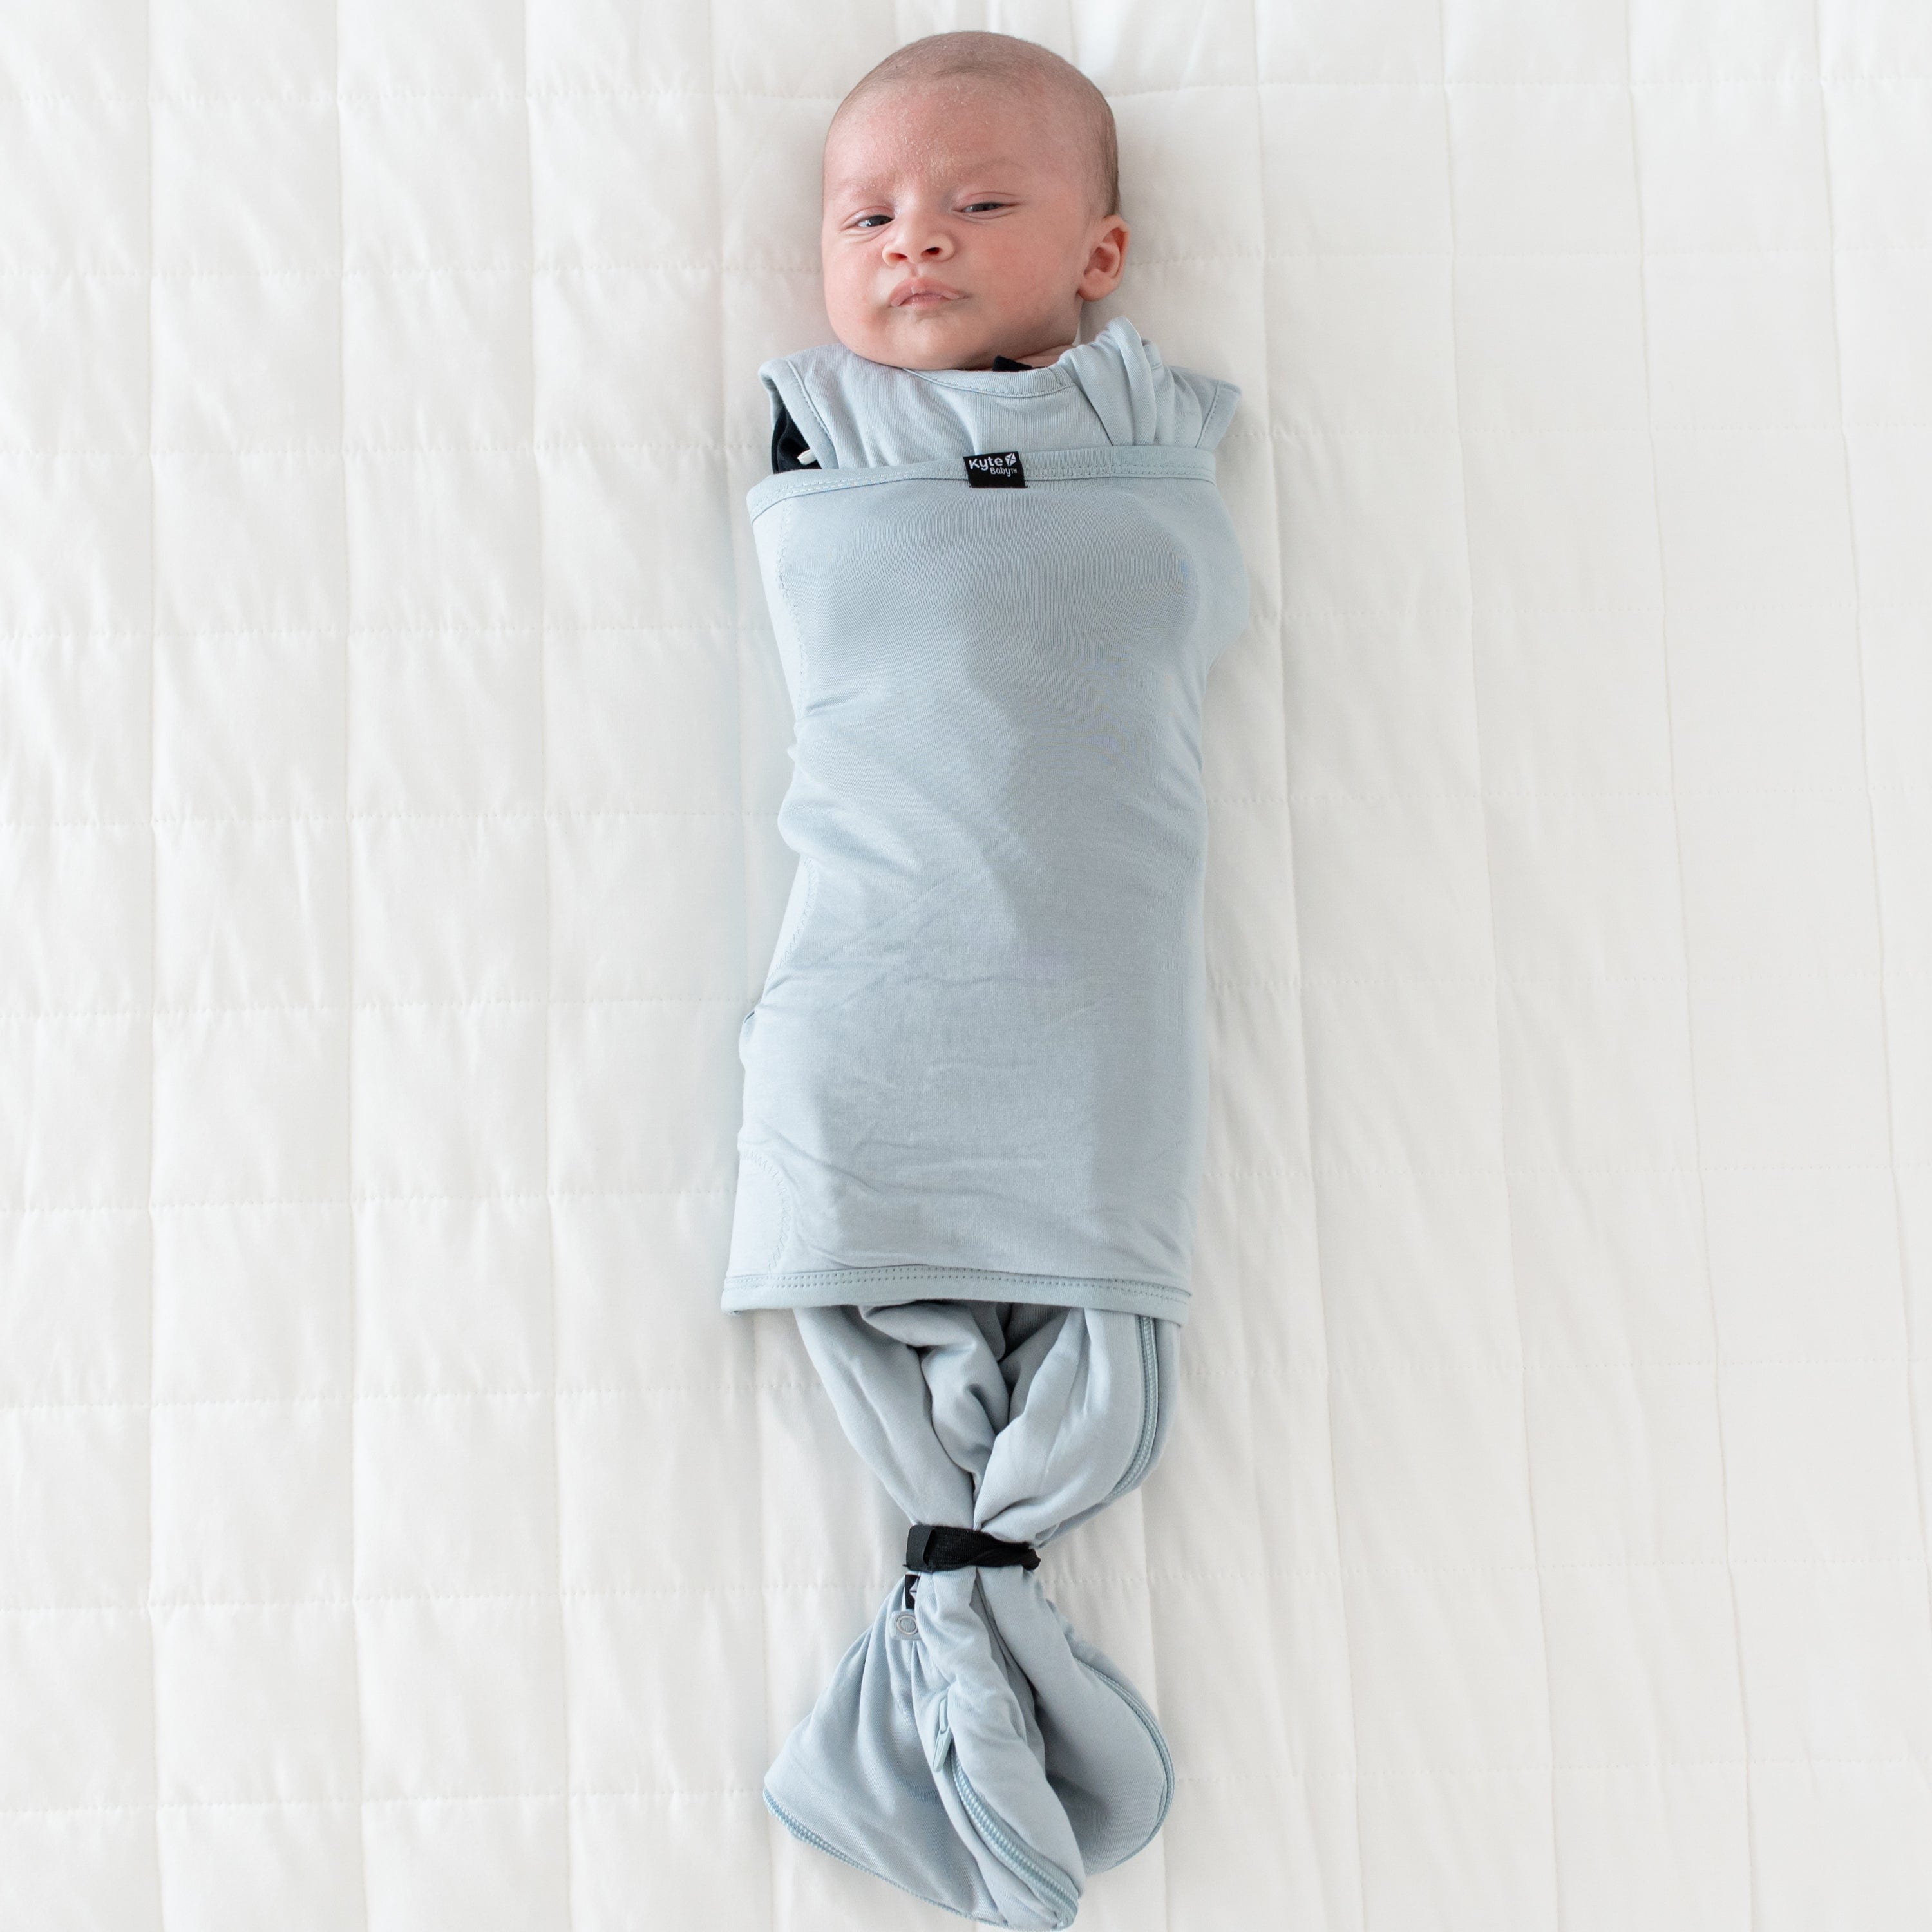 Baby wearing Kyte Baby Sleep Bag Swaddler in Fog with elastic band